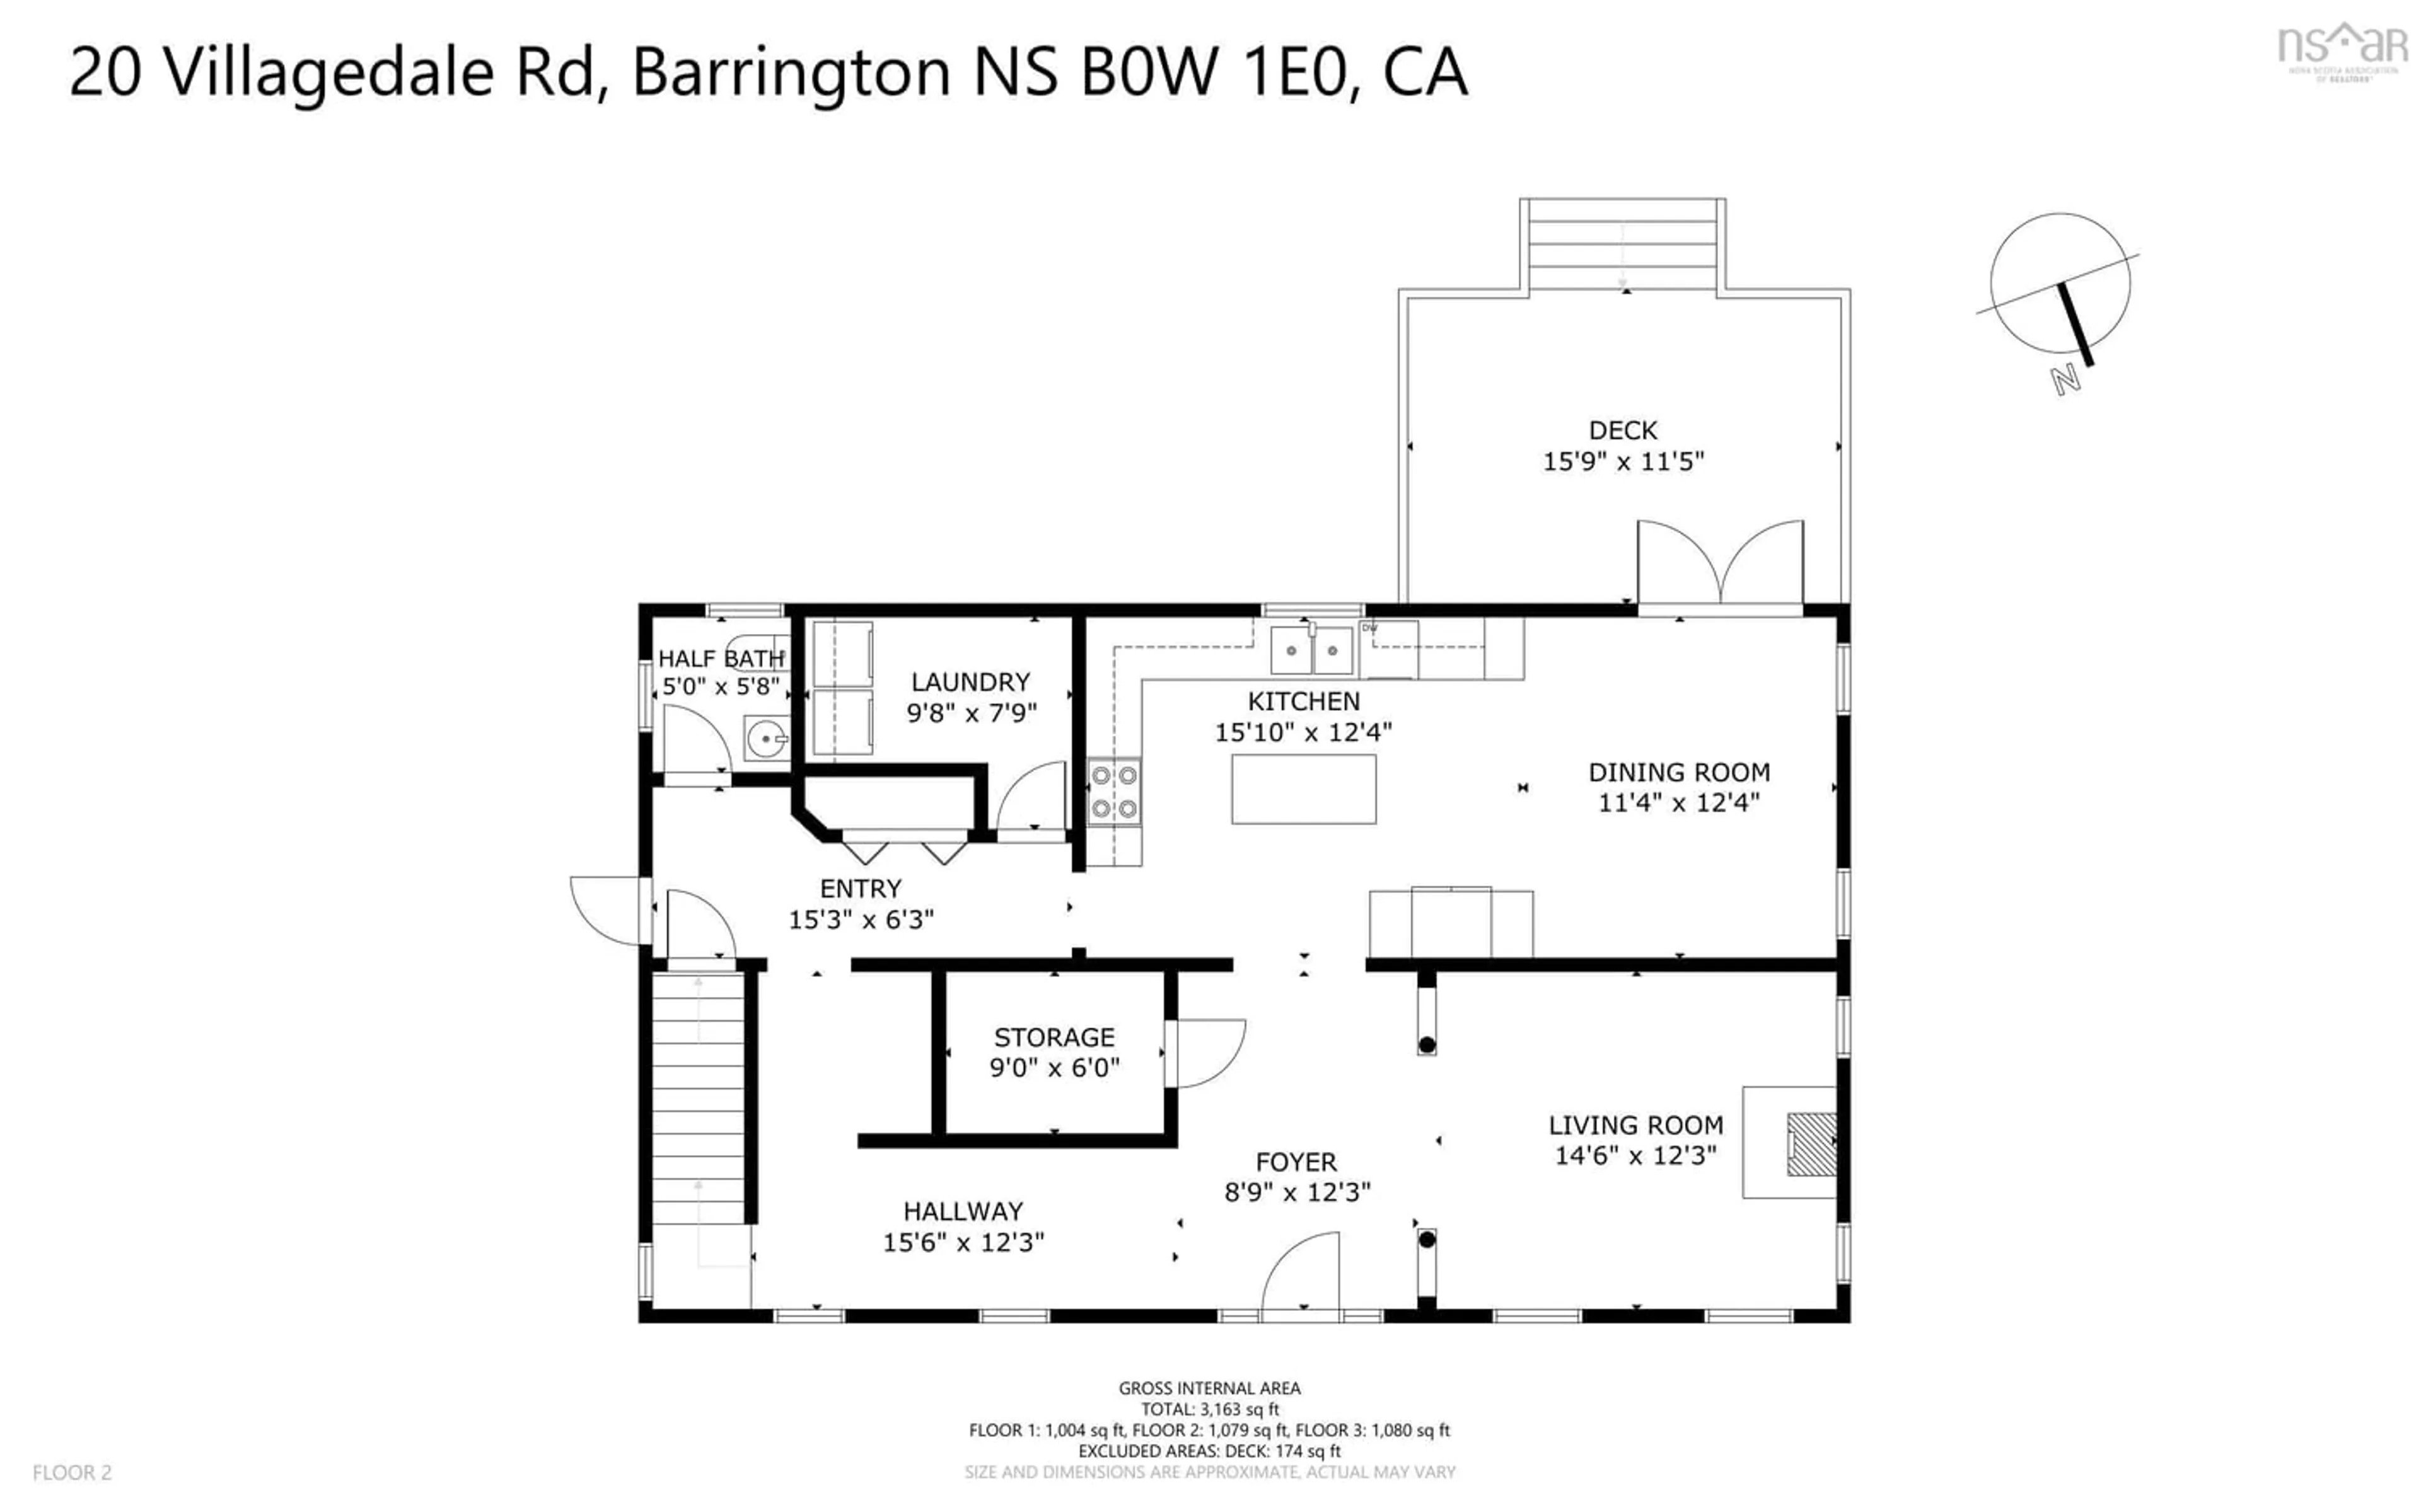 Floor plan for 20 Villagedale Rd, Barrington Nova Scotia B0W 1E0